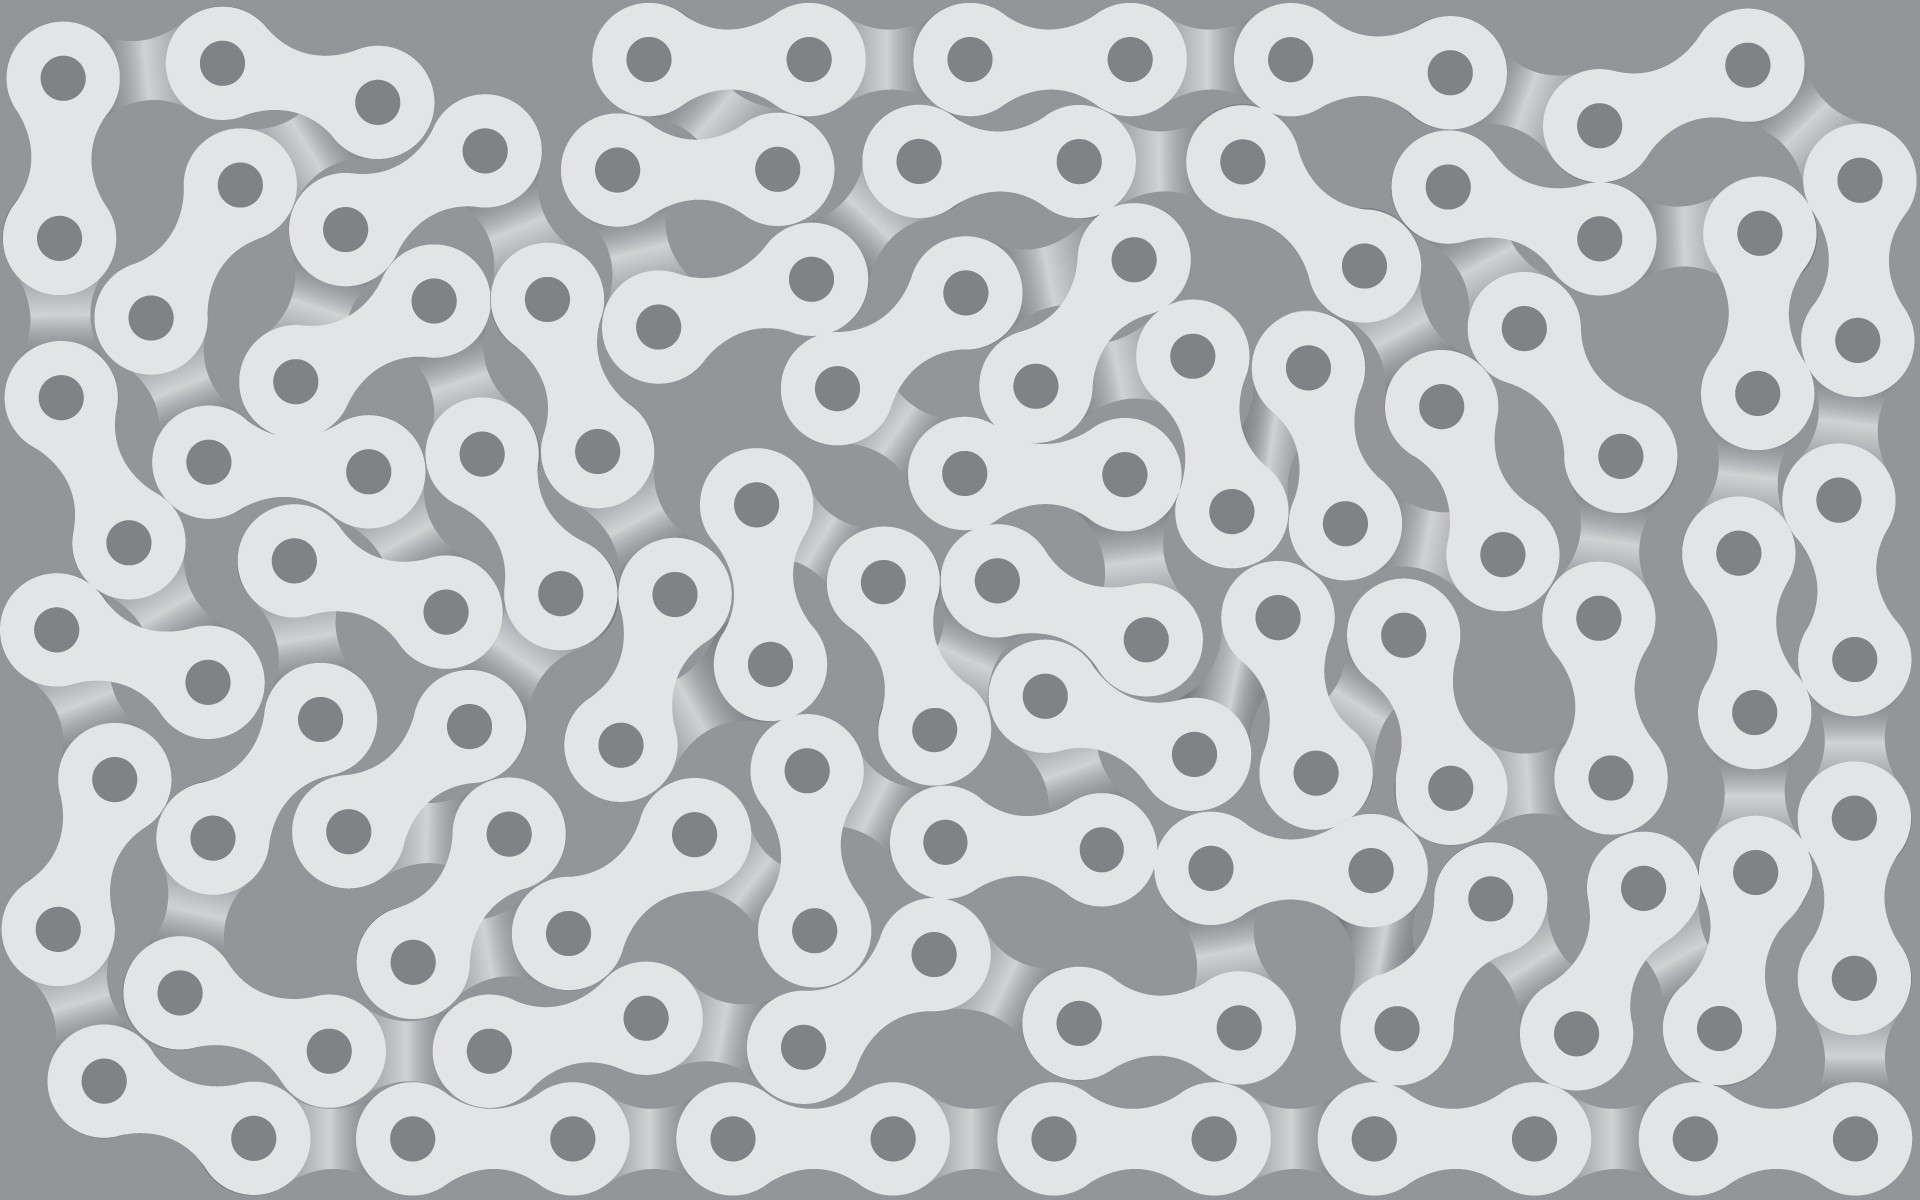 General 1920x1200 digital art gray background minimalism bicycle chain gray